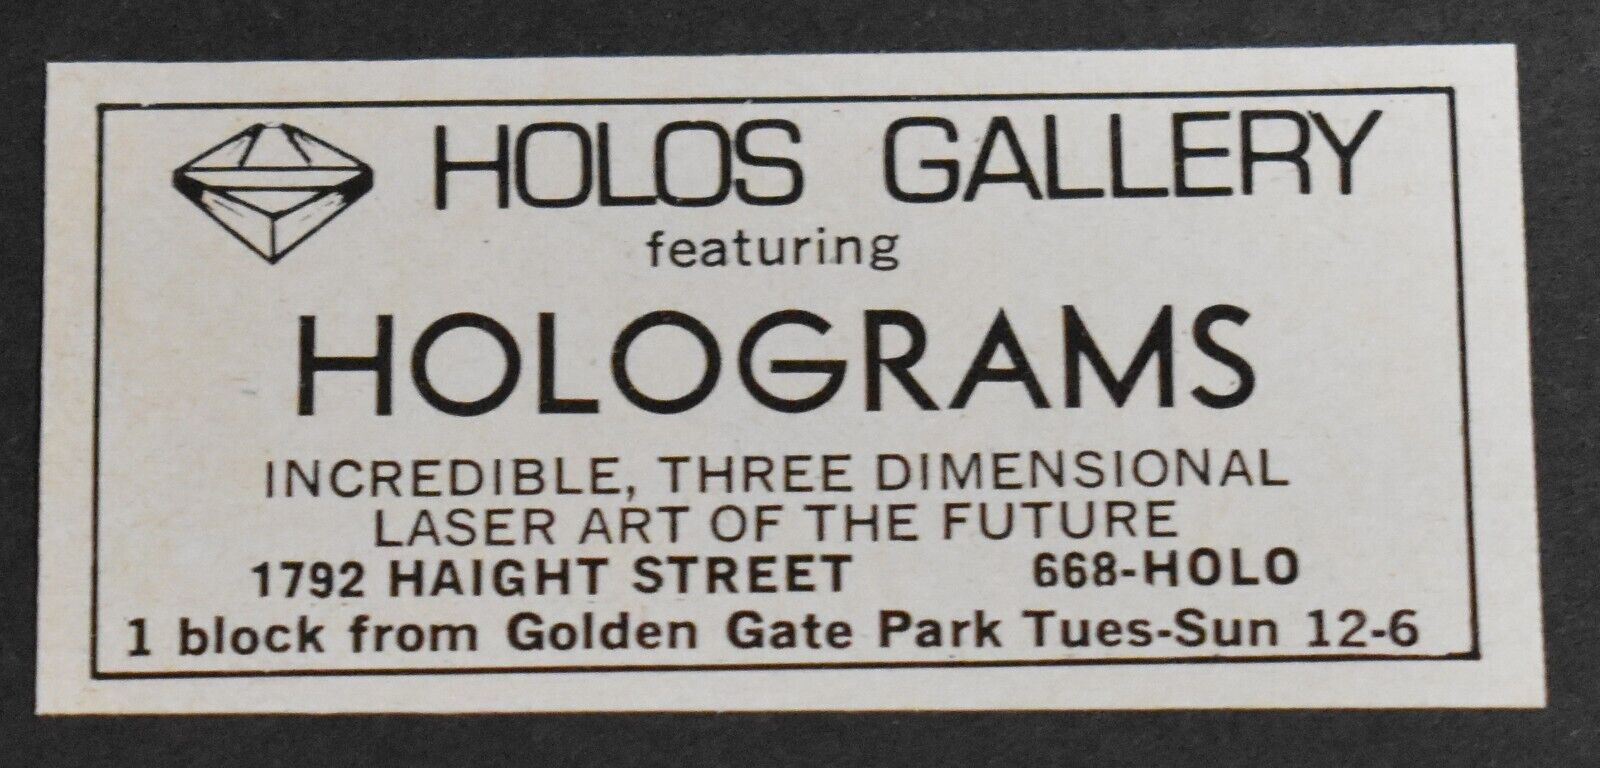 1979 Print Ad San Francisco Holos Gallery Holograms Laser Art 1792 Haight St art